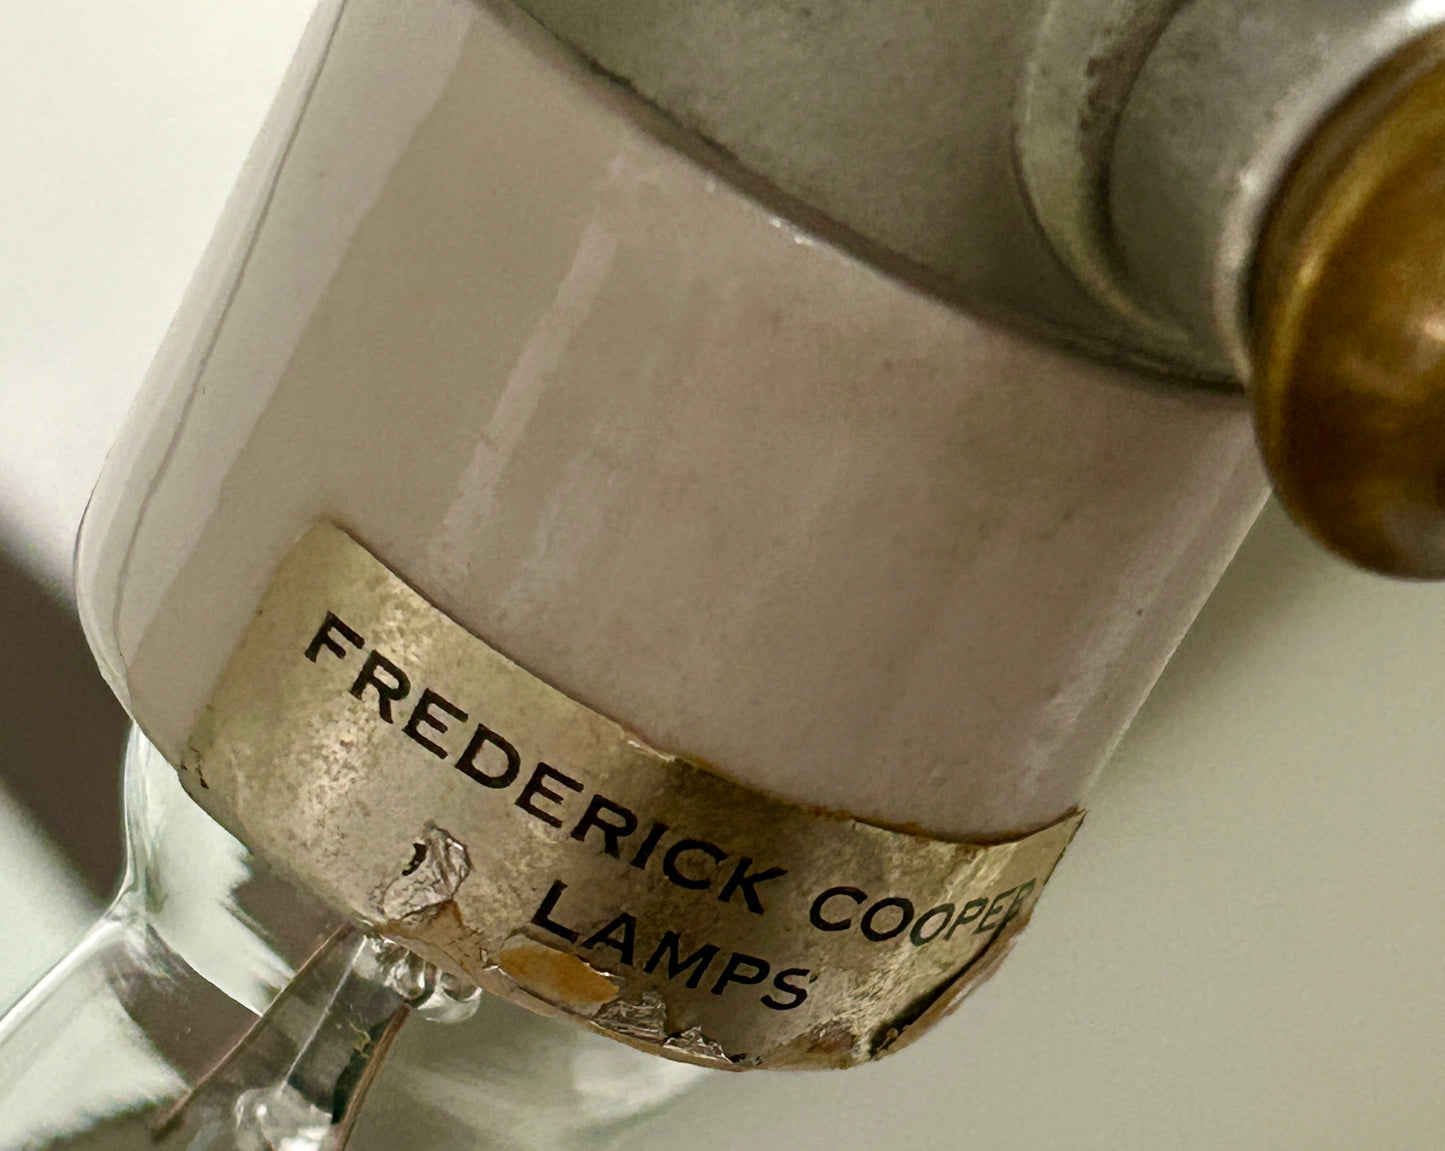 Vintage Frederick Cooper Brass & Tole Bouillotte Lamp